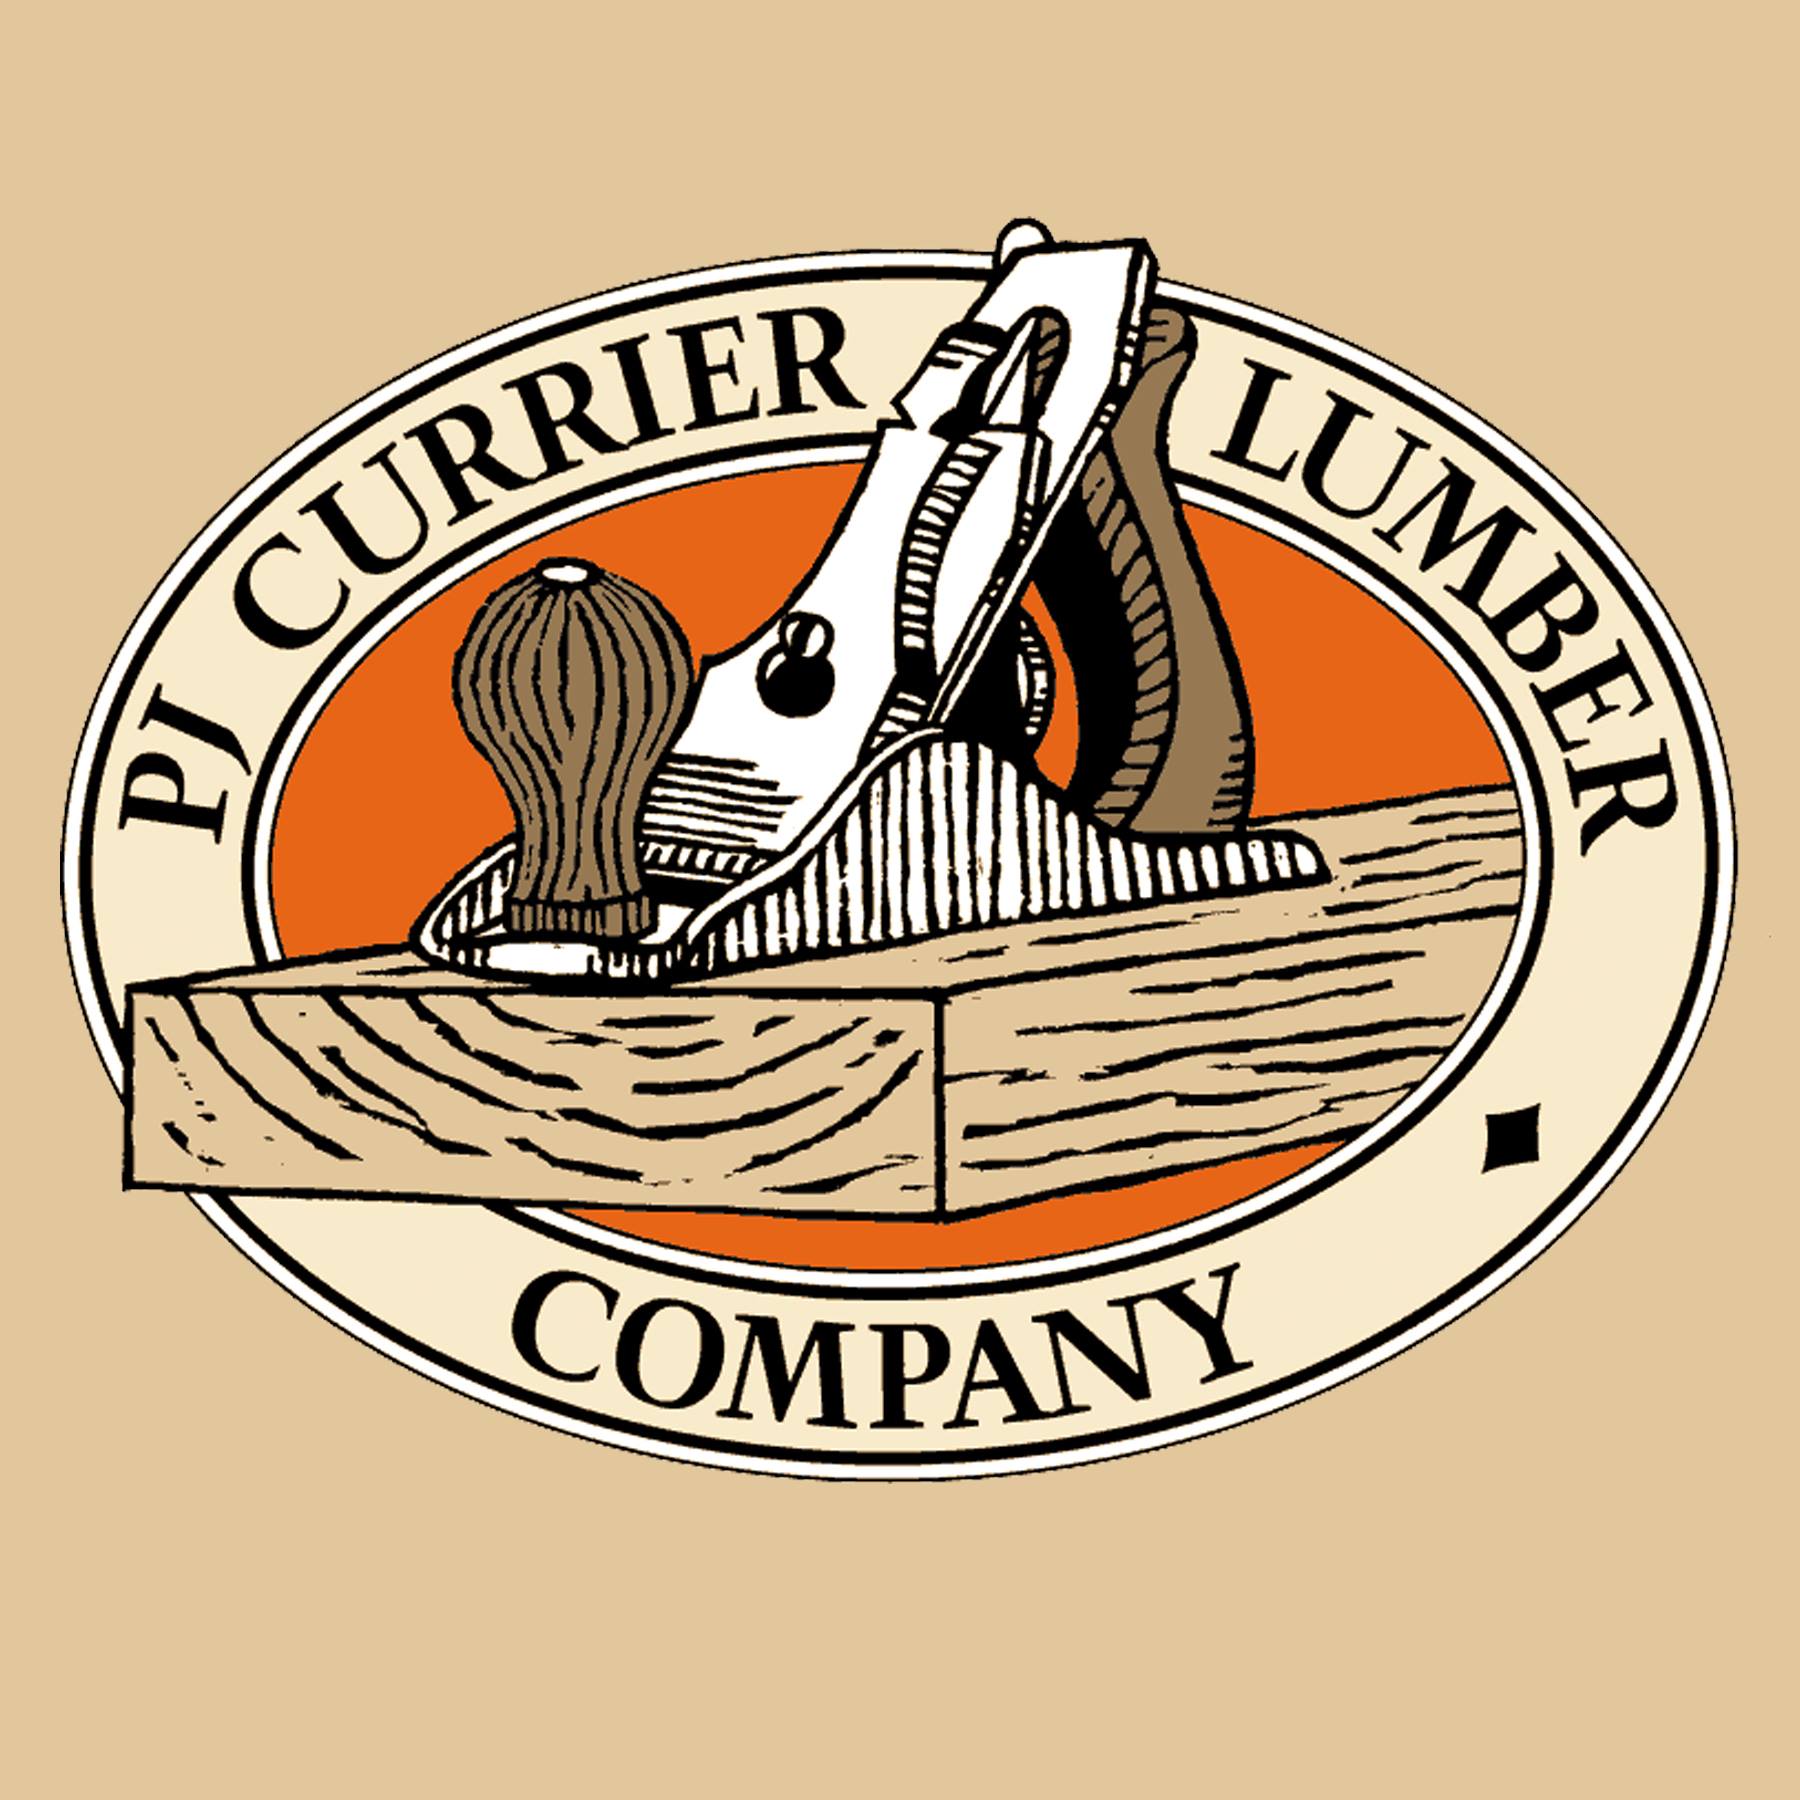 PJ Currier Lumber Company logo